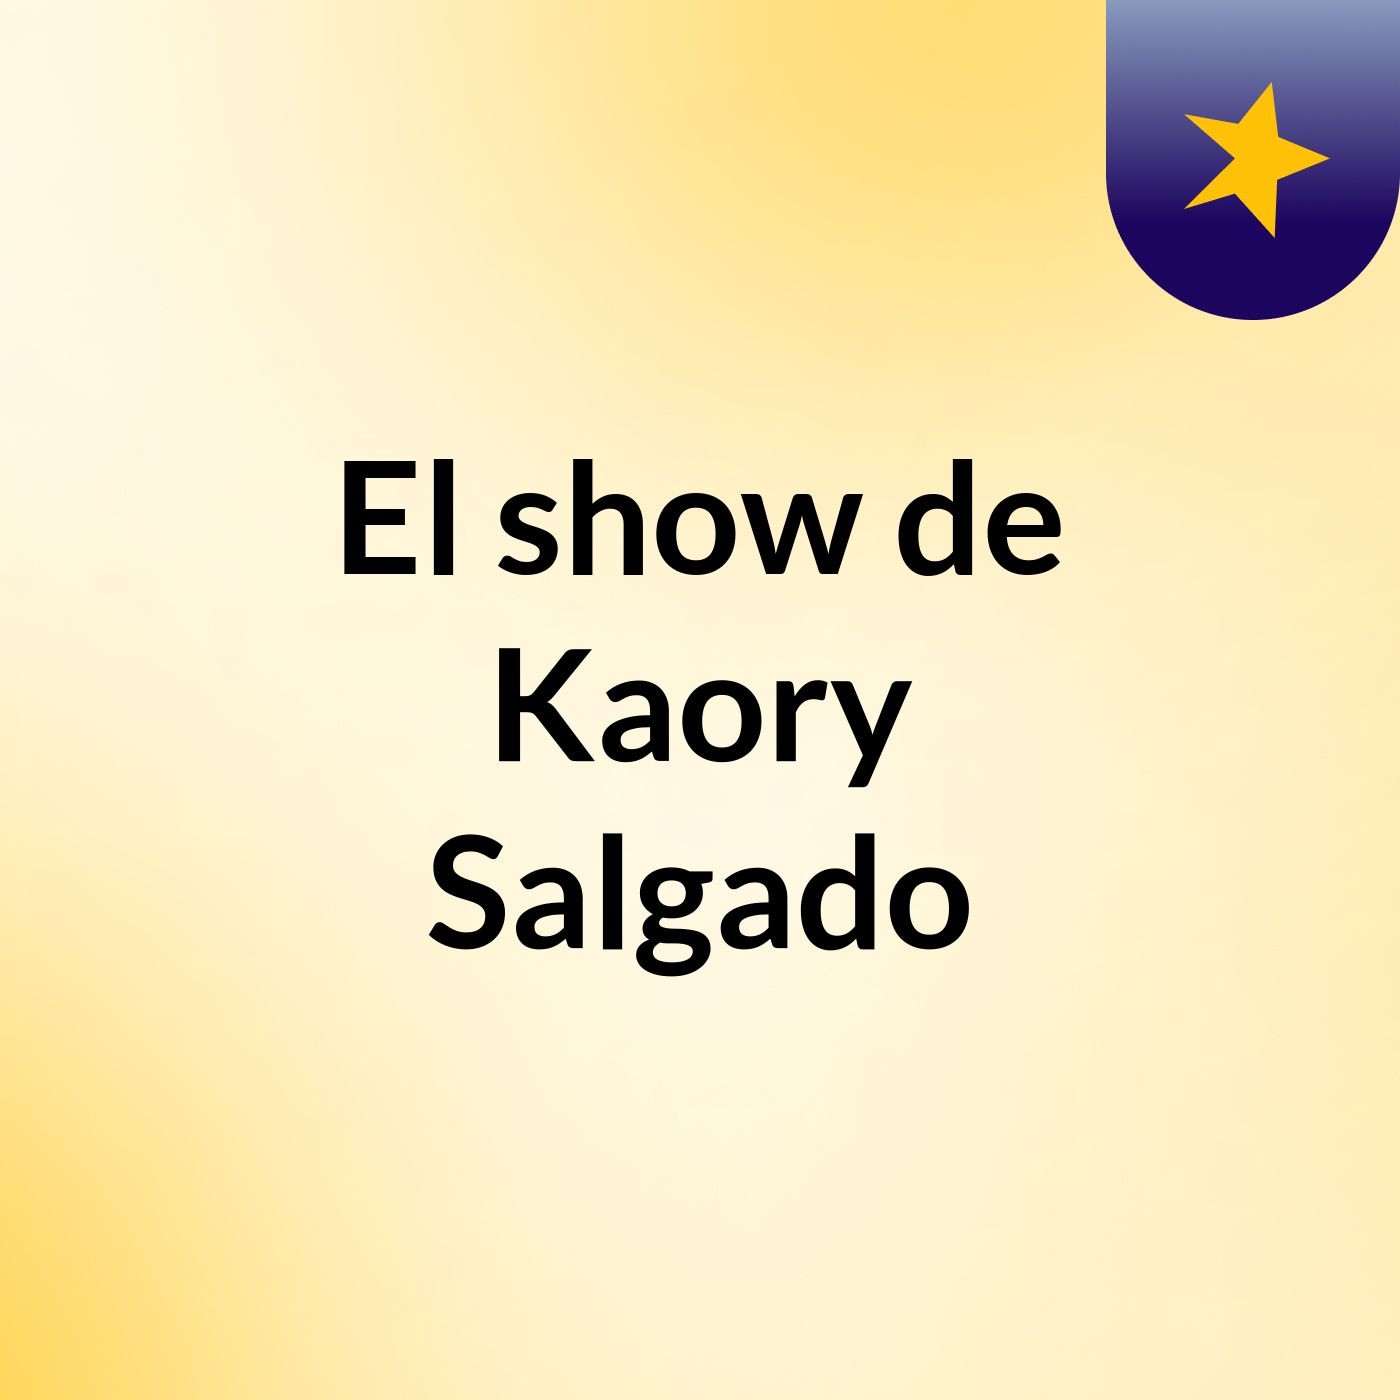 El show de Kaory Salgado